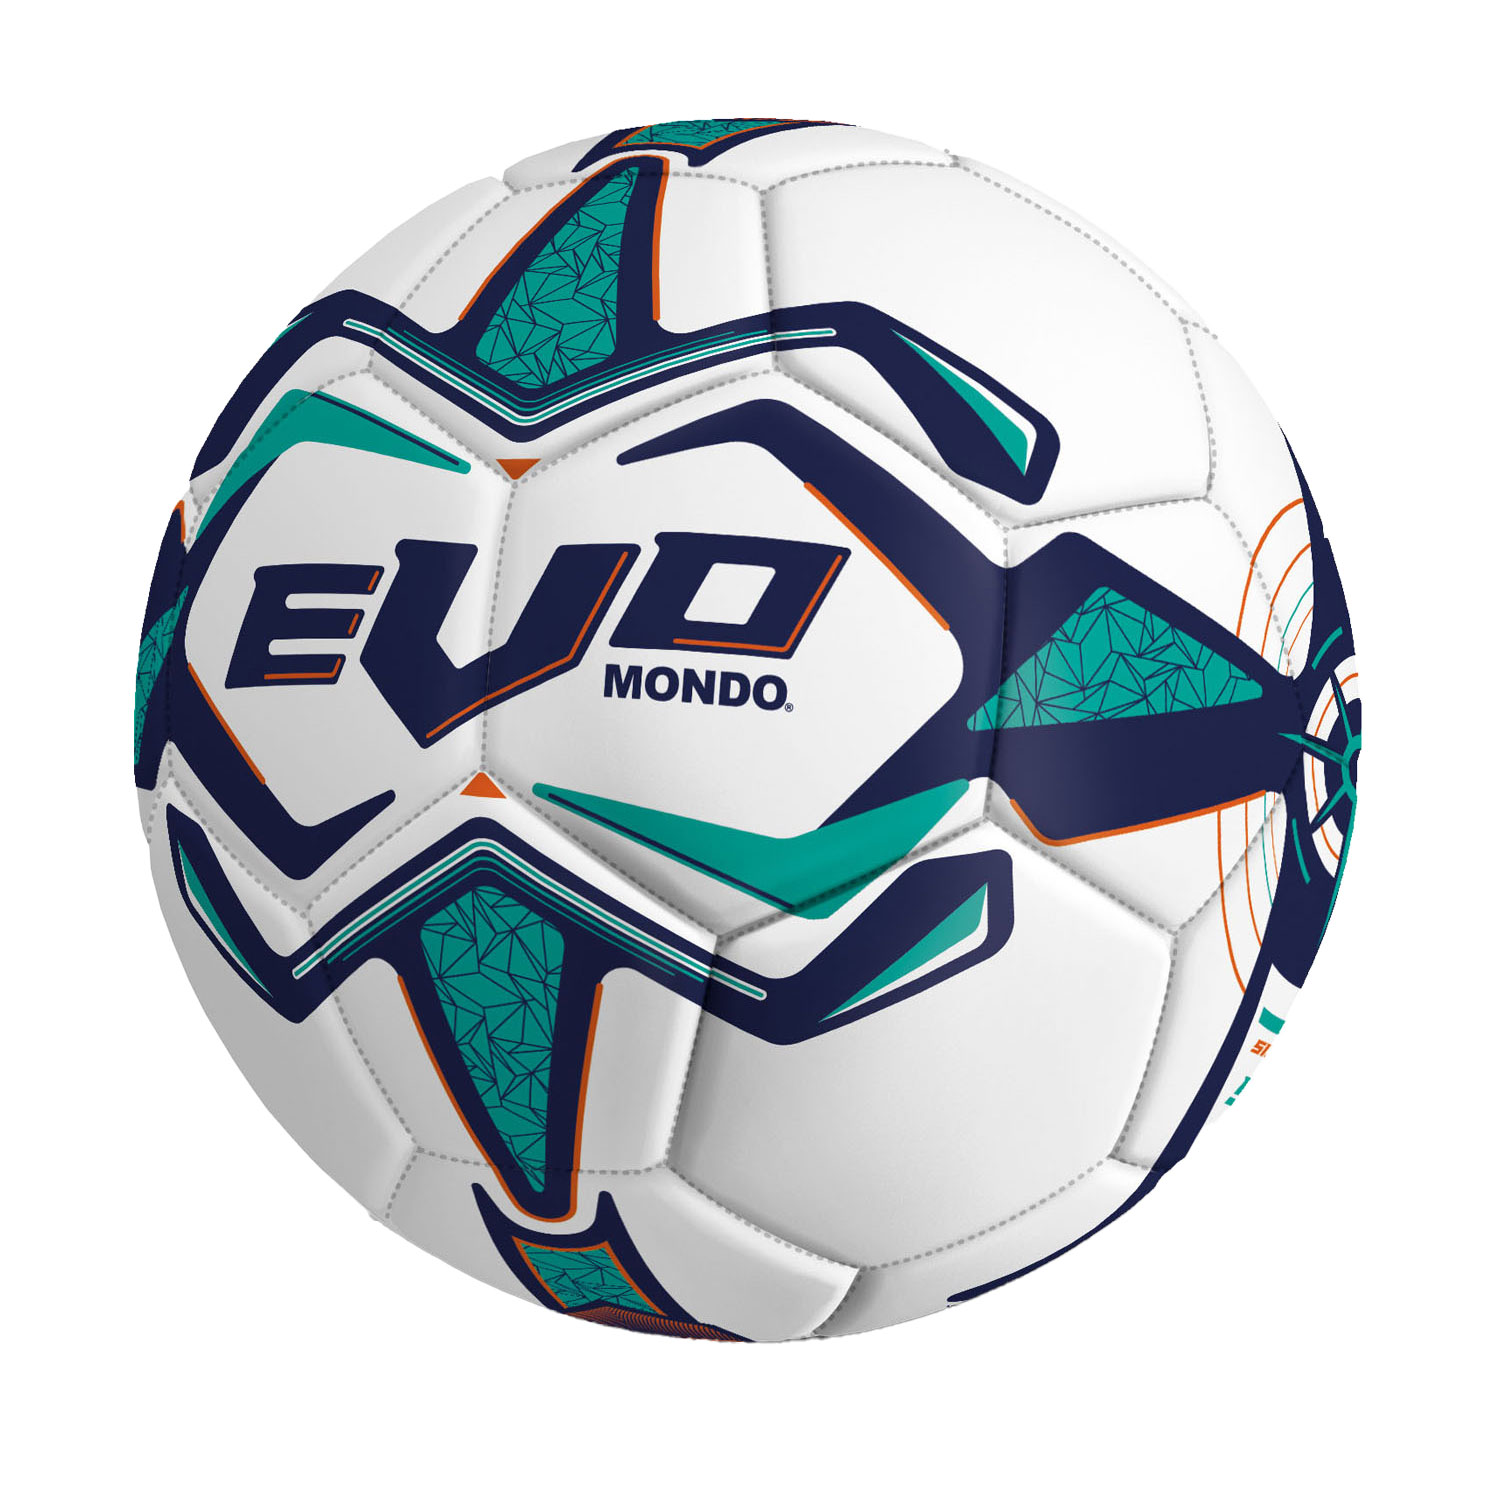 Mondo Football Evo, 21,5 cm